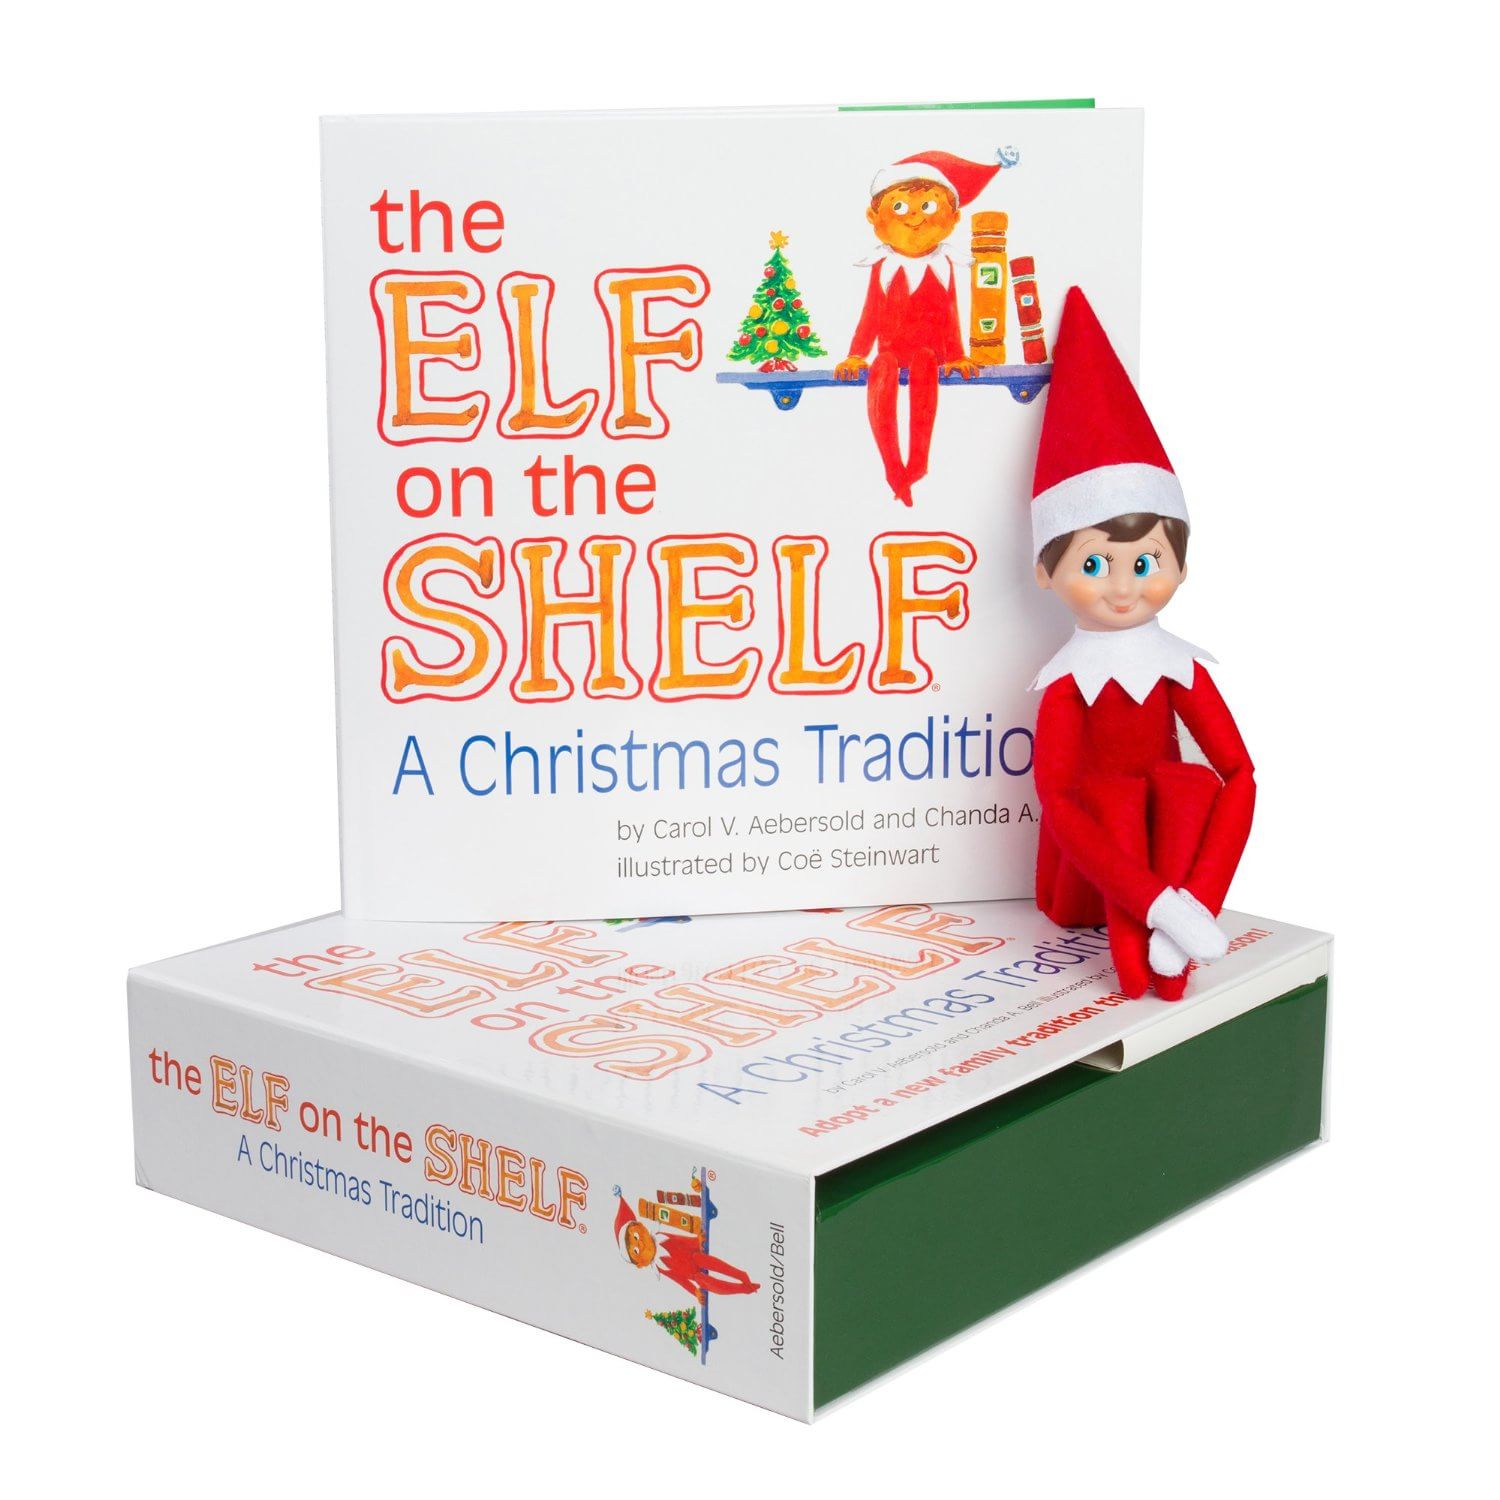 The elf on the shelf